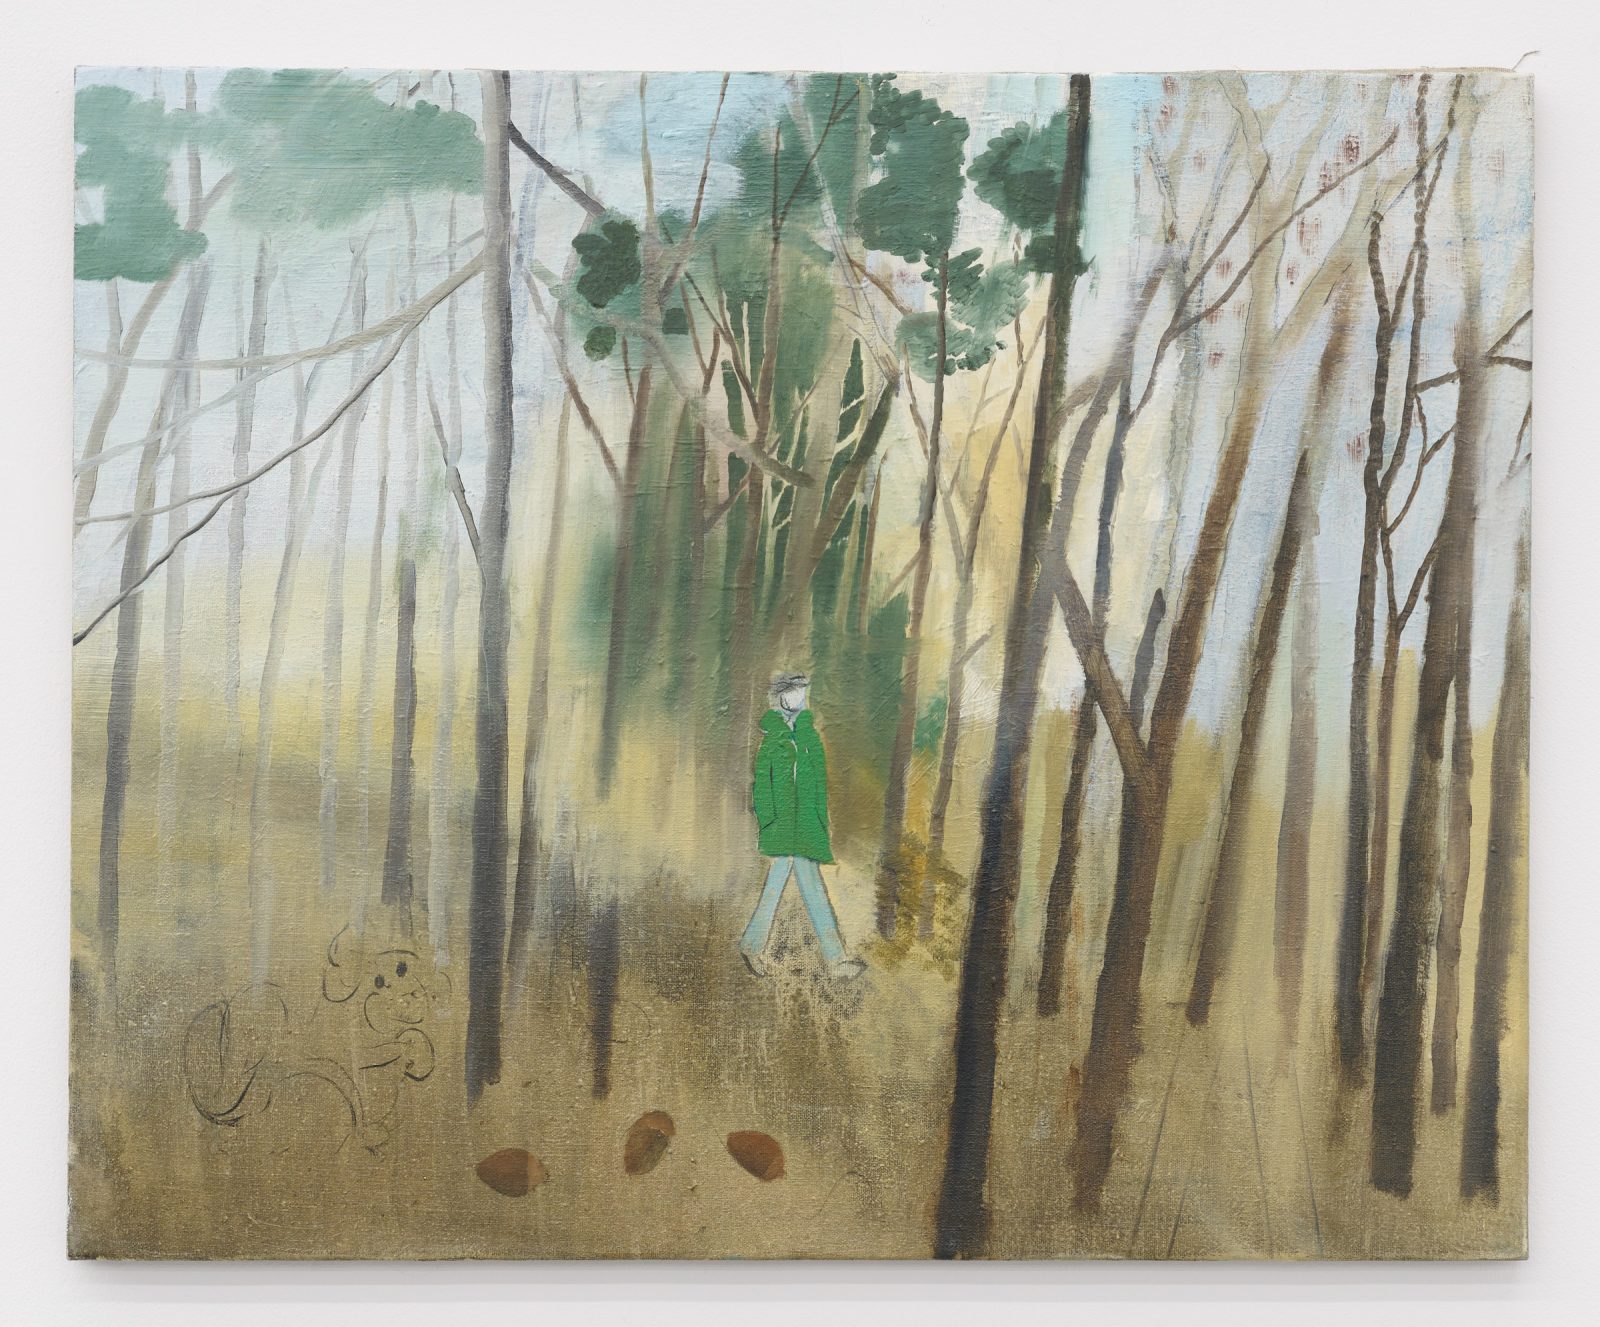 Yu Nishimura
seasons
2021
oil on canvas
53 × 65 cm